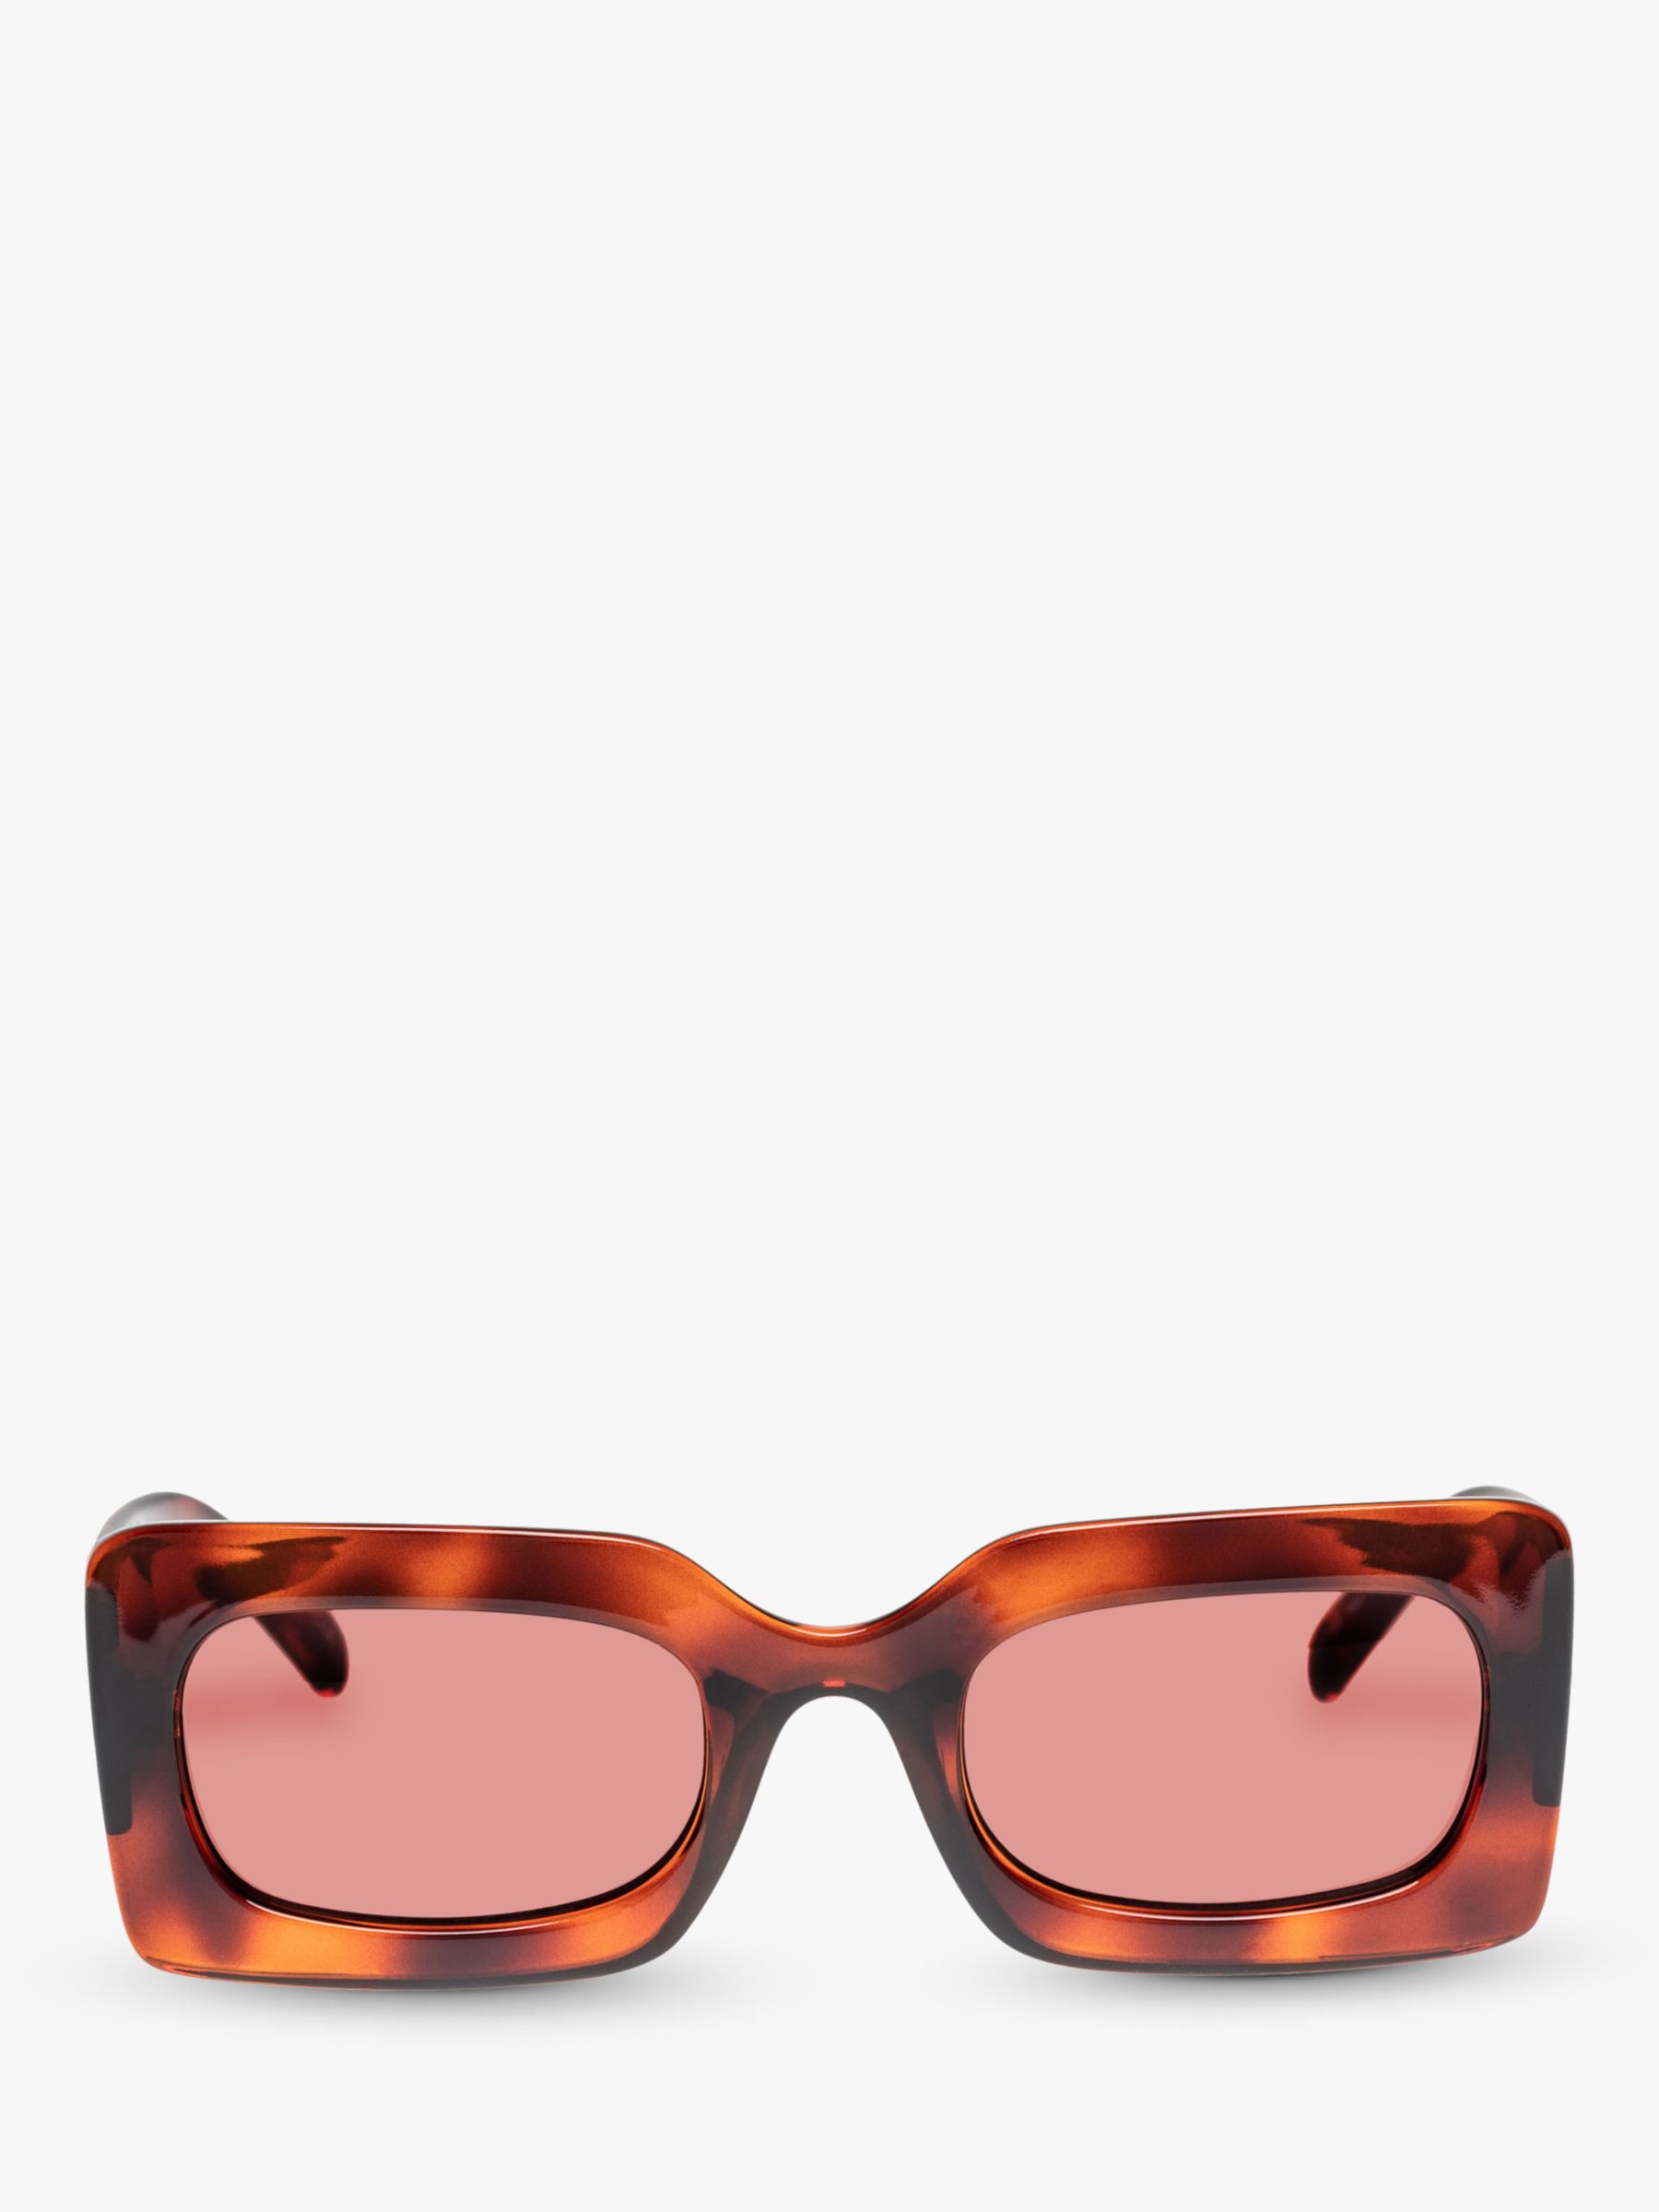 Buy Le Specs L5000174 Women's Oh Damn Rectangular Sunglasses, Tortoise/Pink Online at johnlewis.com